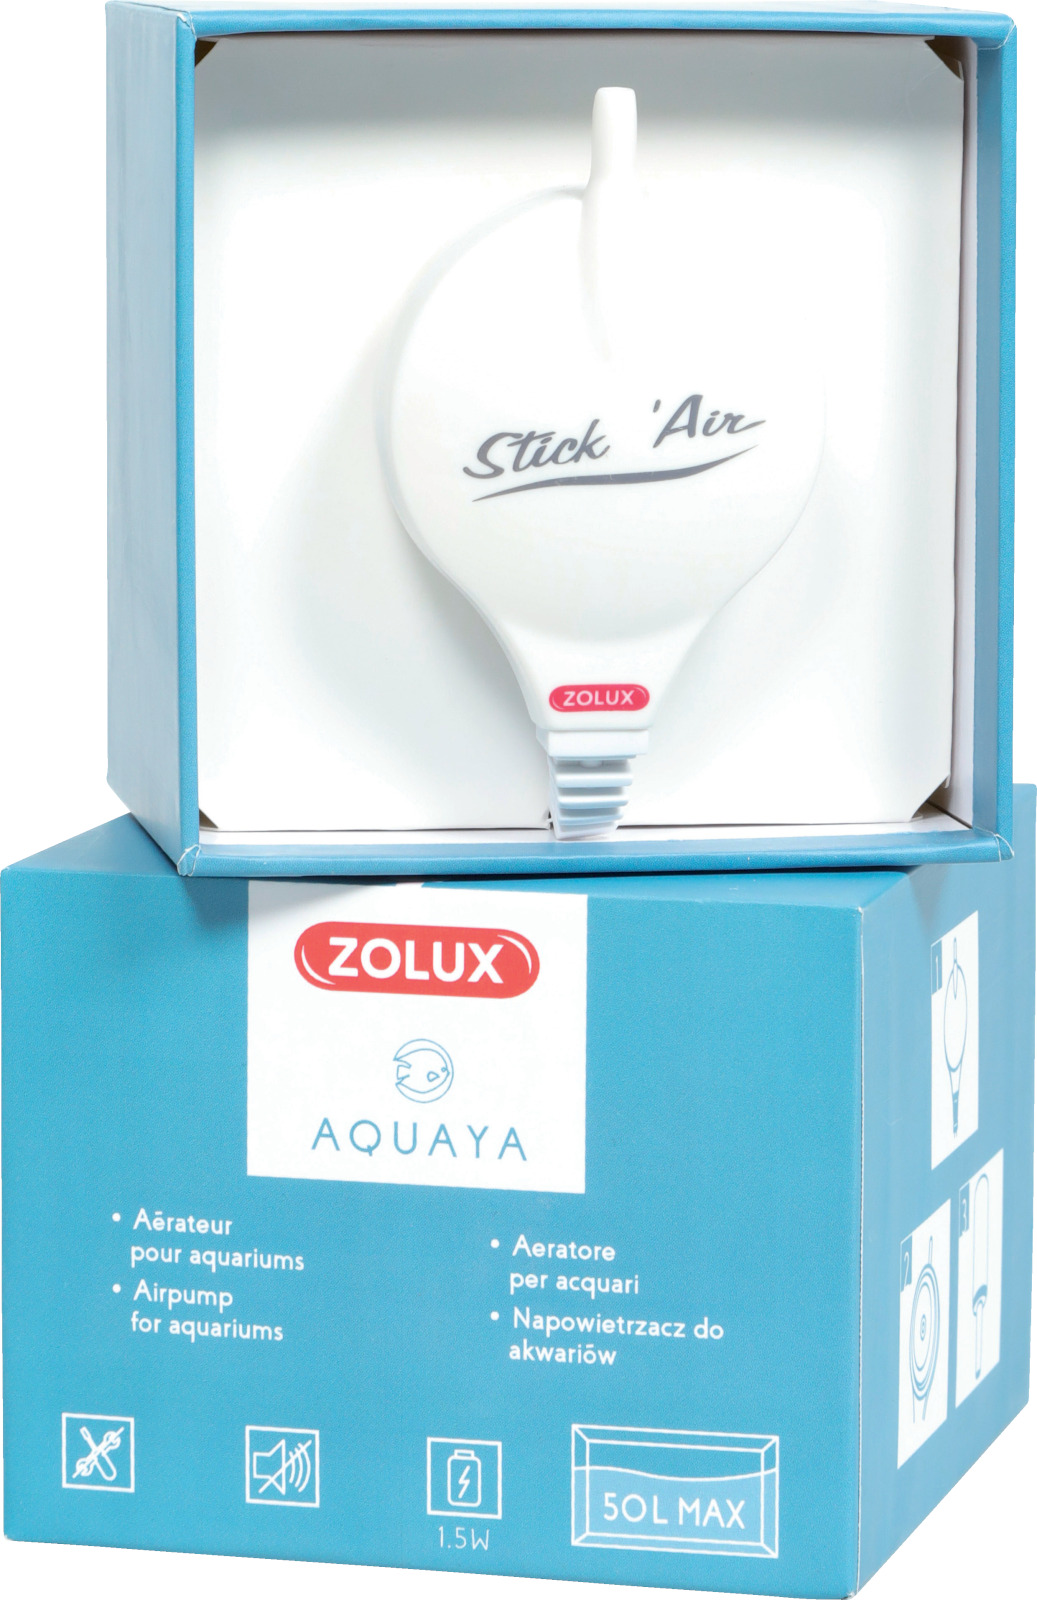 zolux-aquaya-stickair-blanc-mini-pompe-a-air-18-6-l-h-pour-aquarium-jusqu-a-50-l